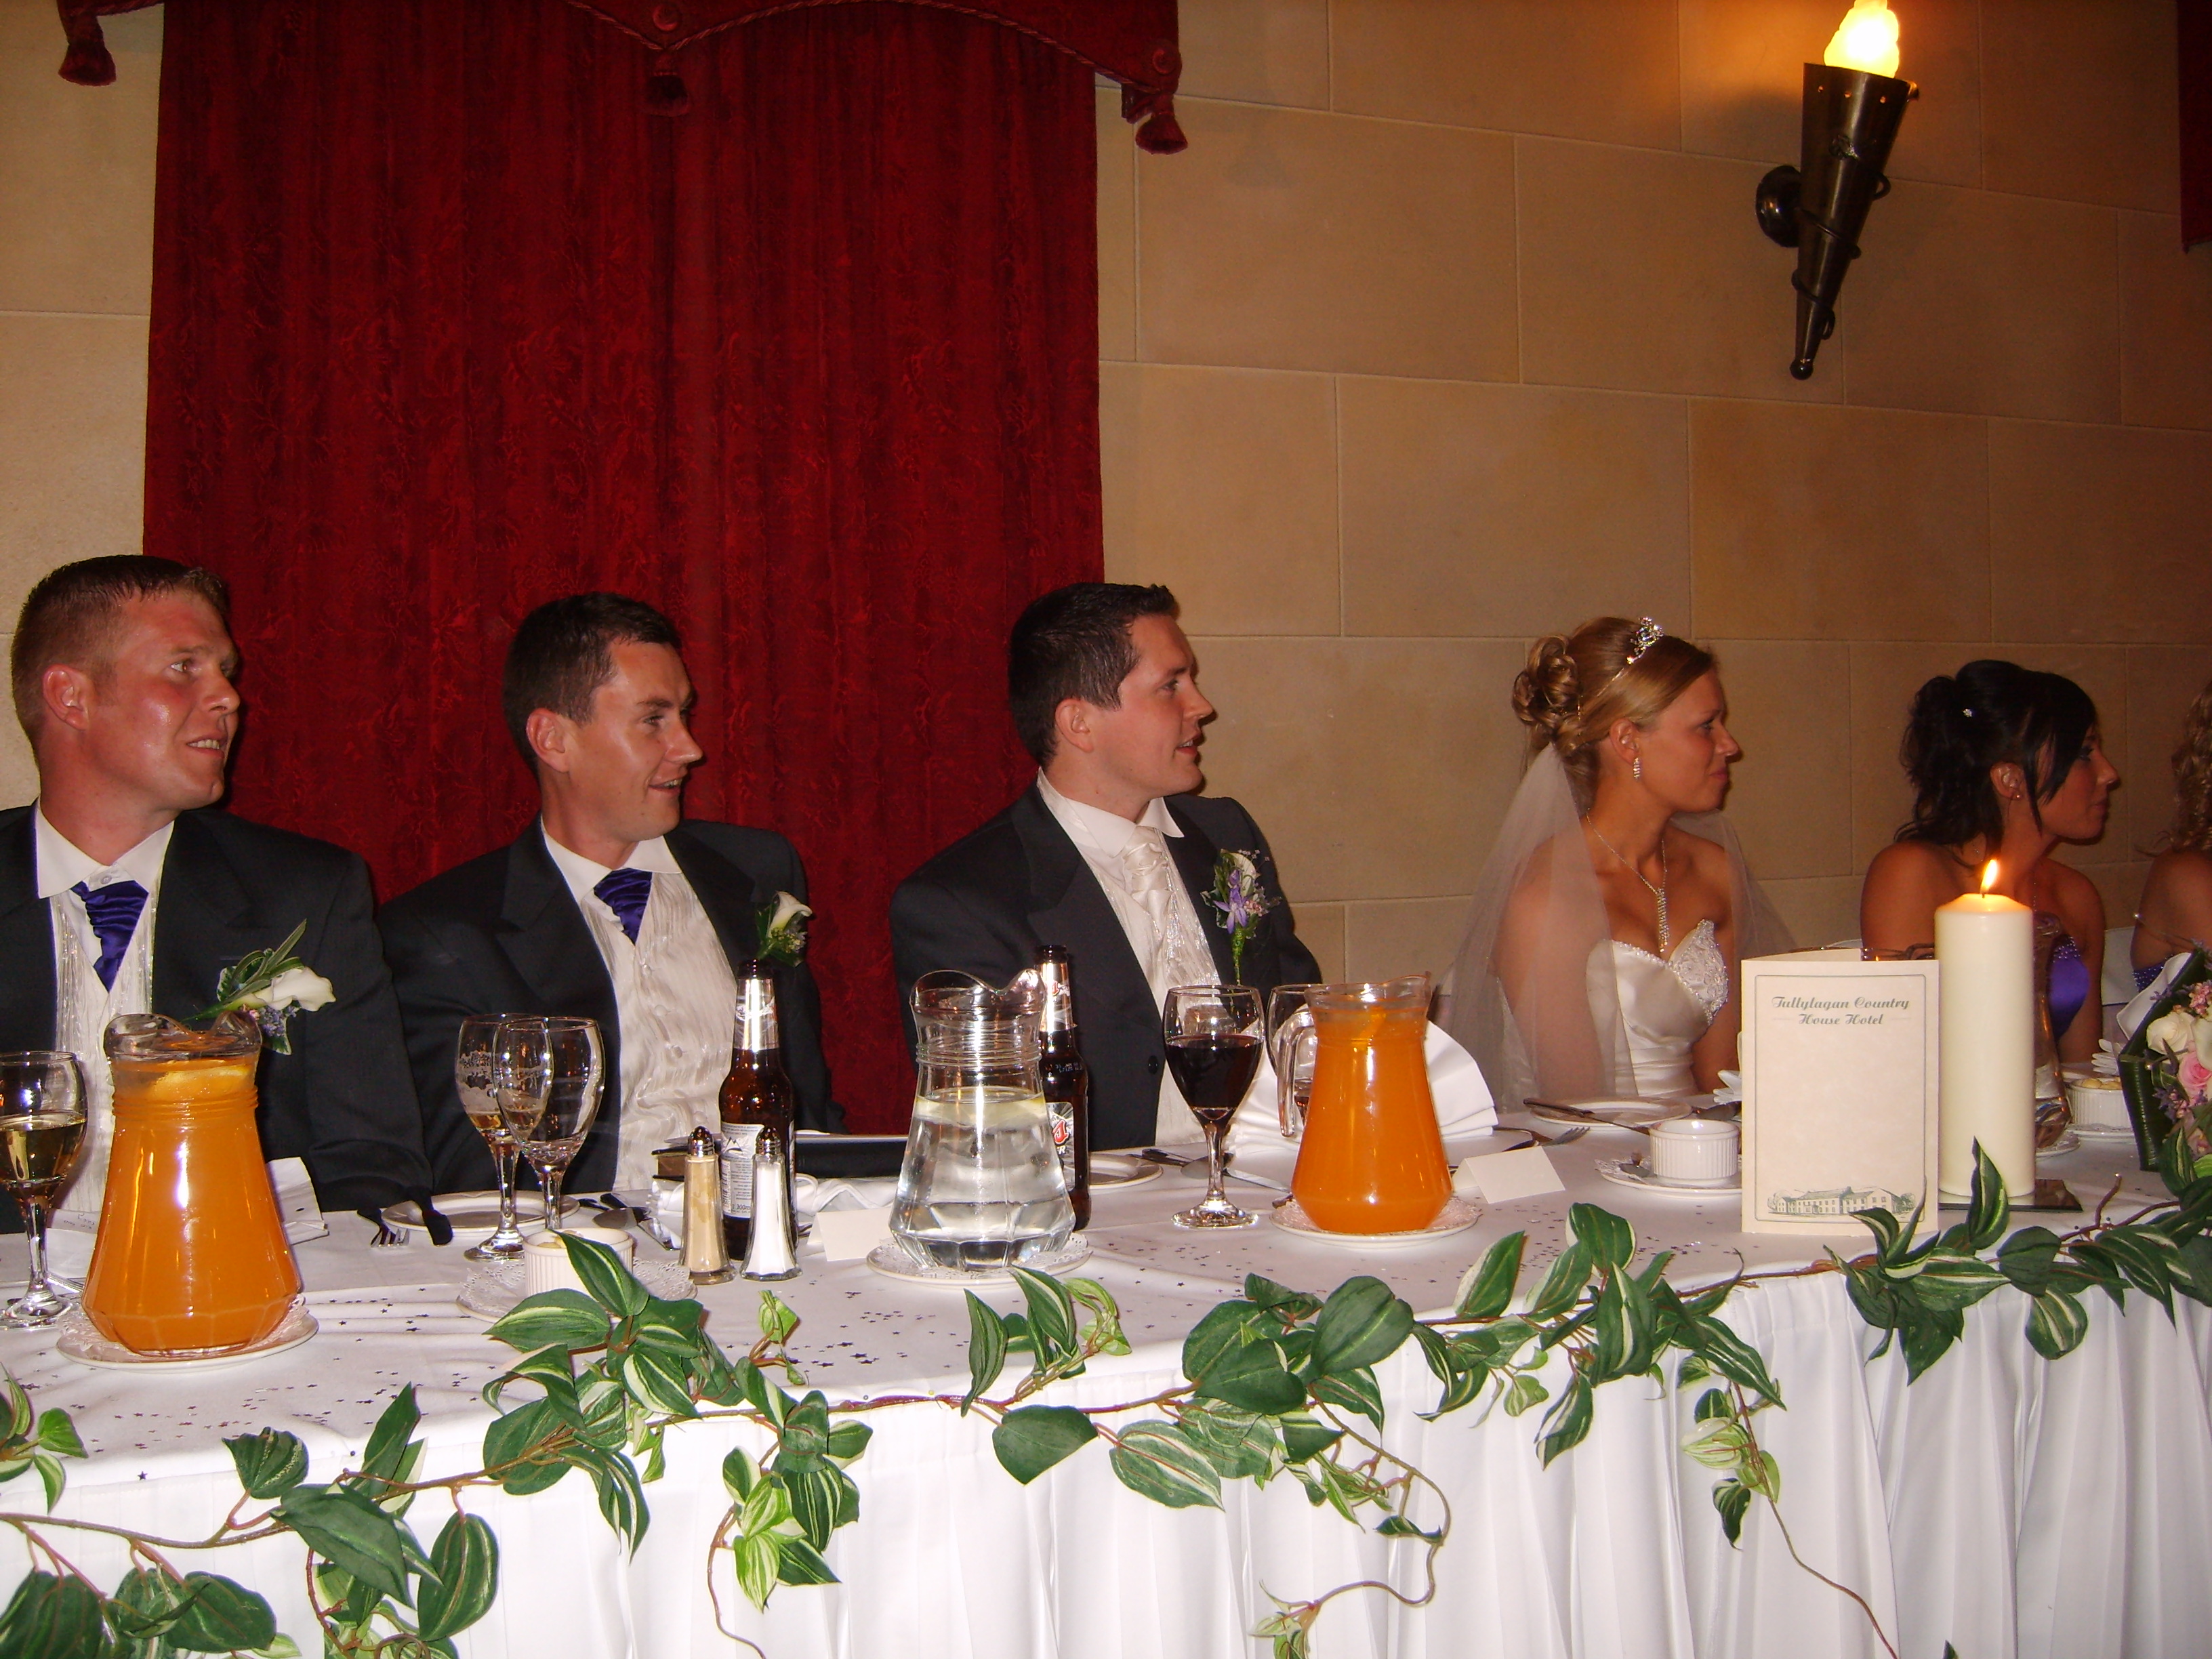 Des invités à un mariage | Source : Flickr.com